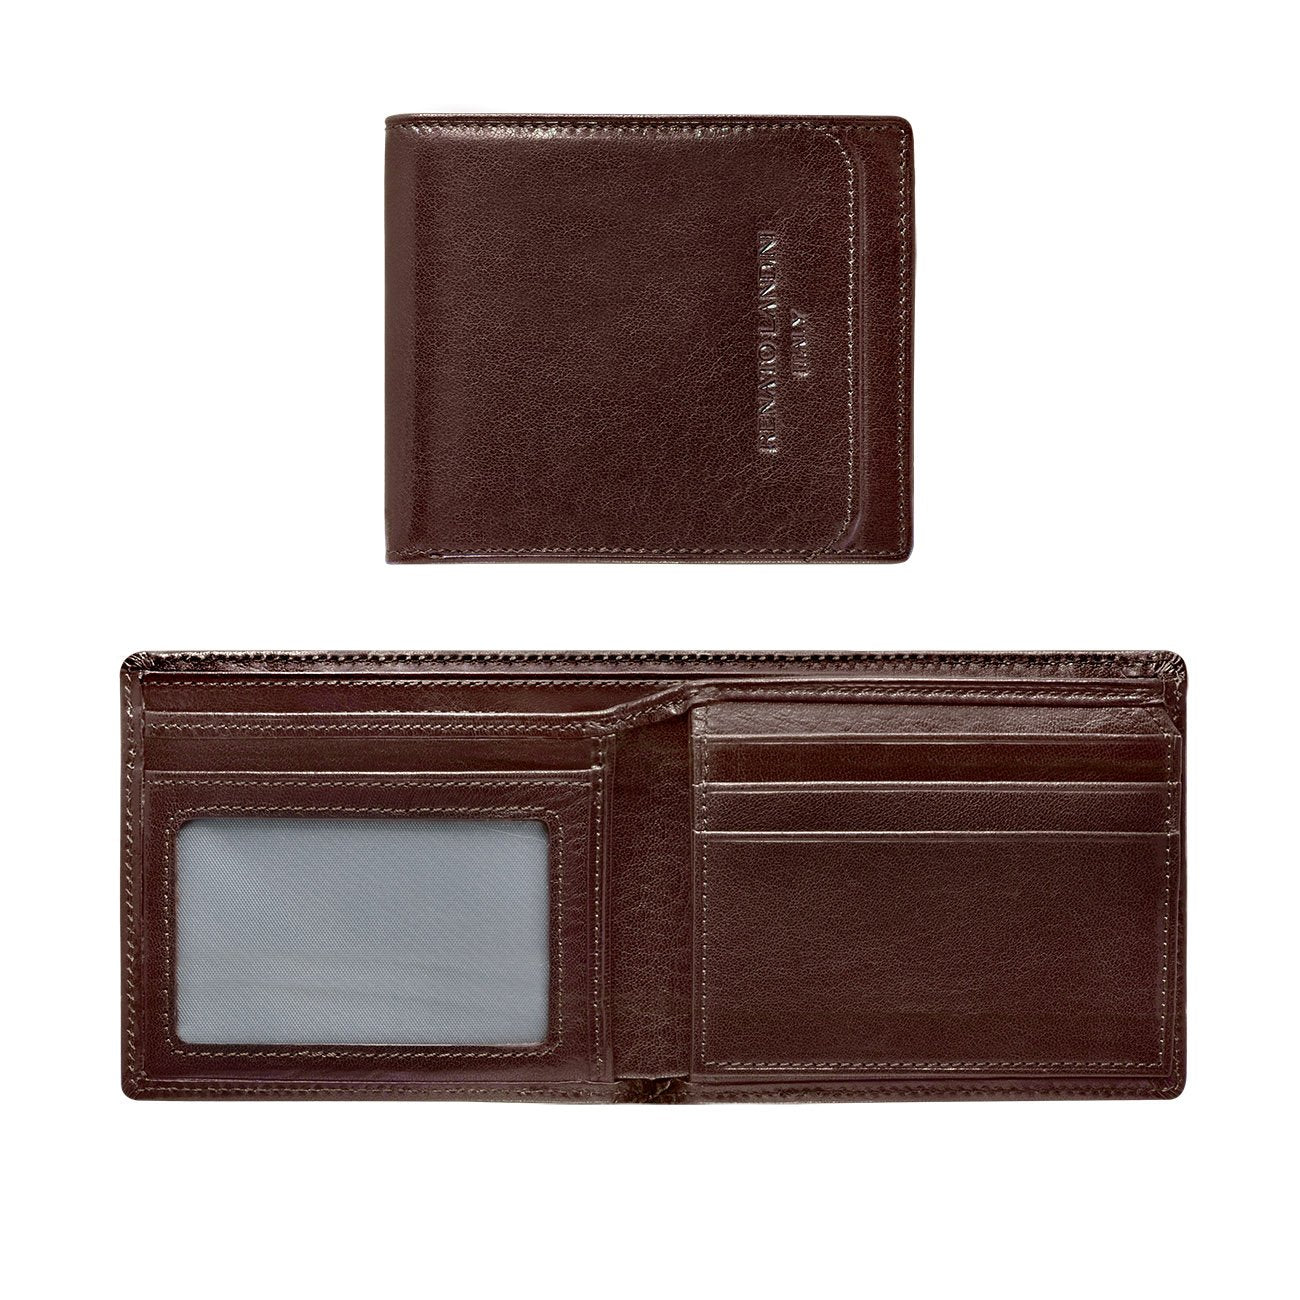 RENATO LANDINI Gift Set: Brown Leather Bag + Pen + Men's Wallet + Cufflink + Key Holder